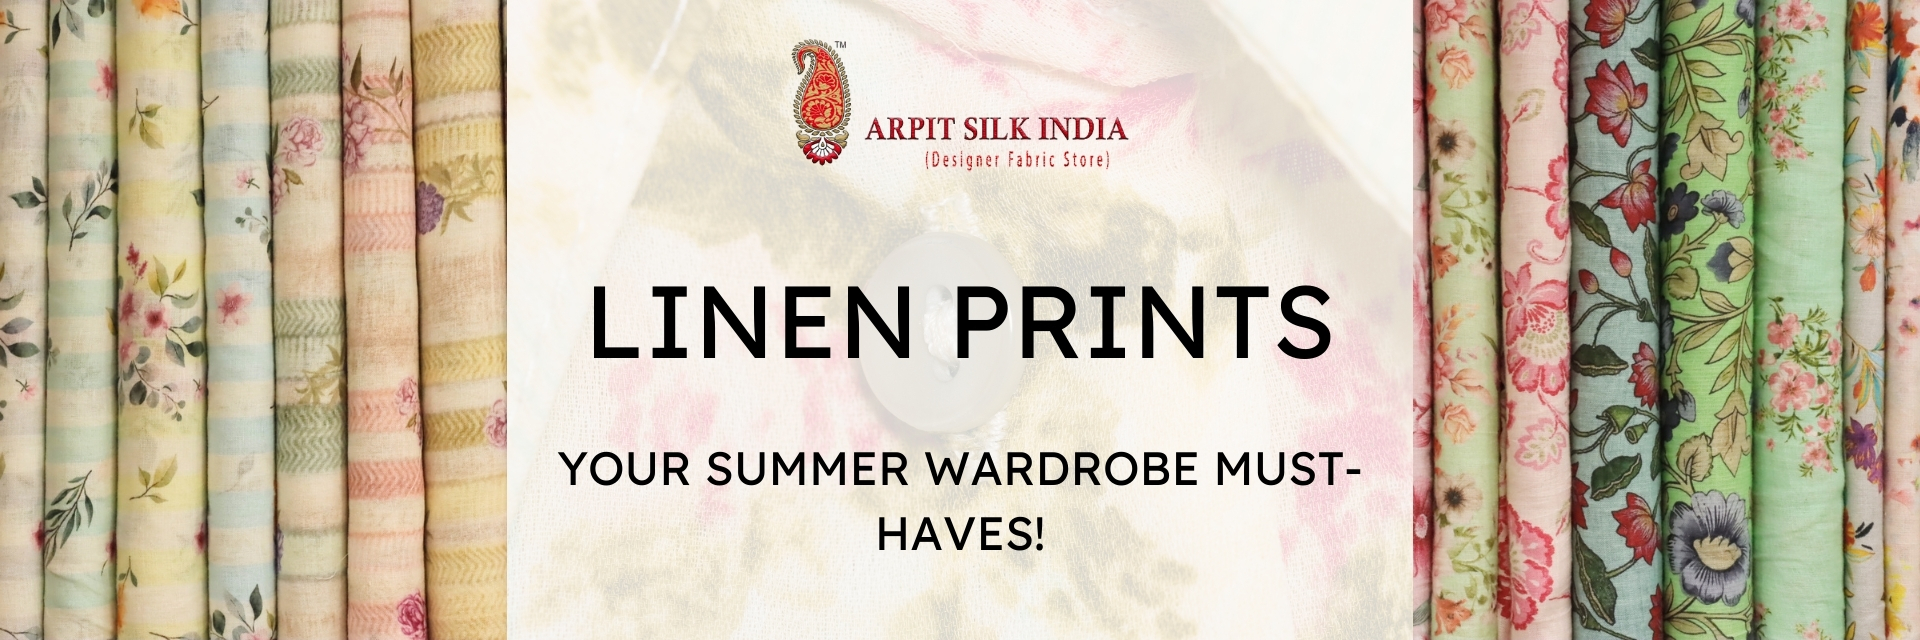 Linen Prints